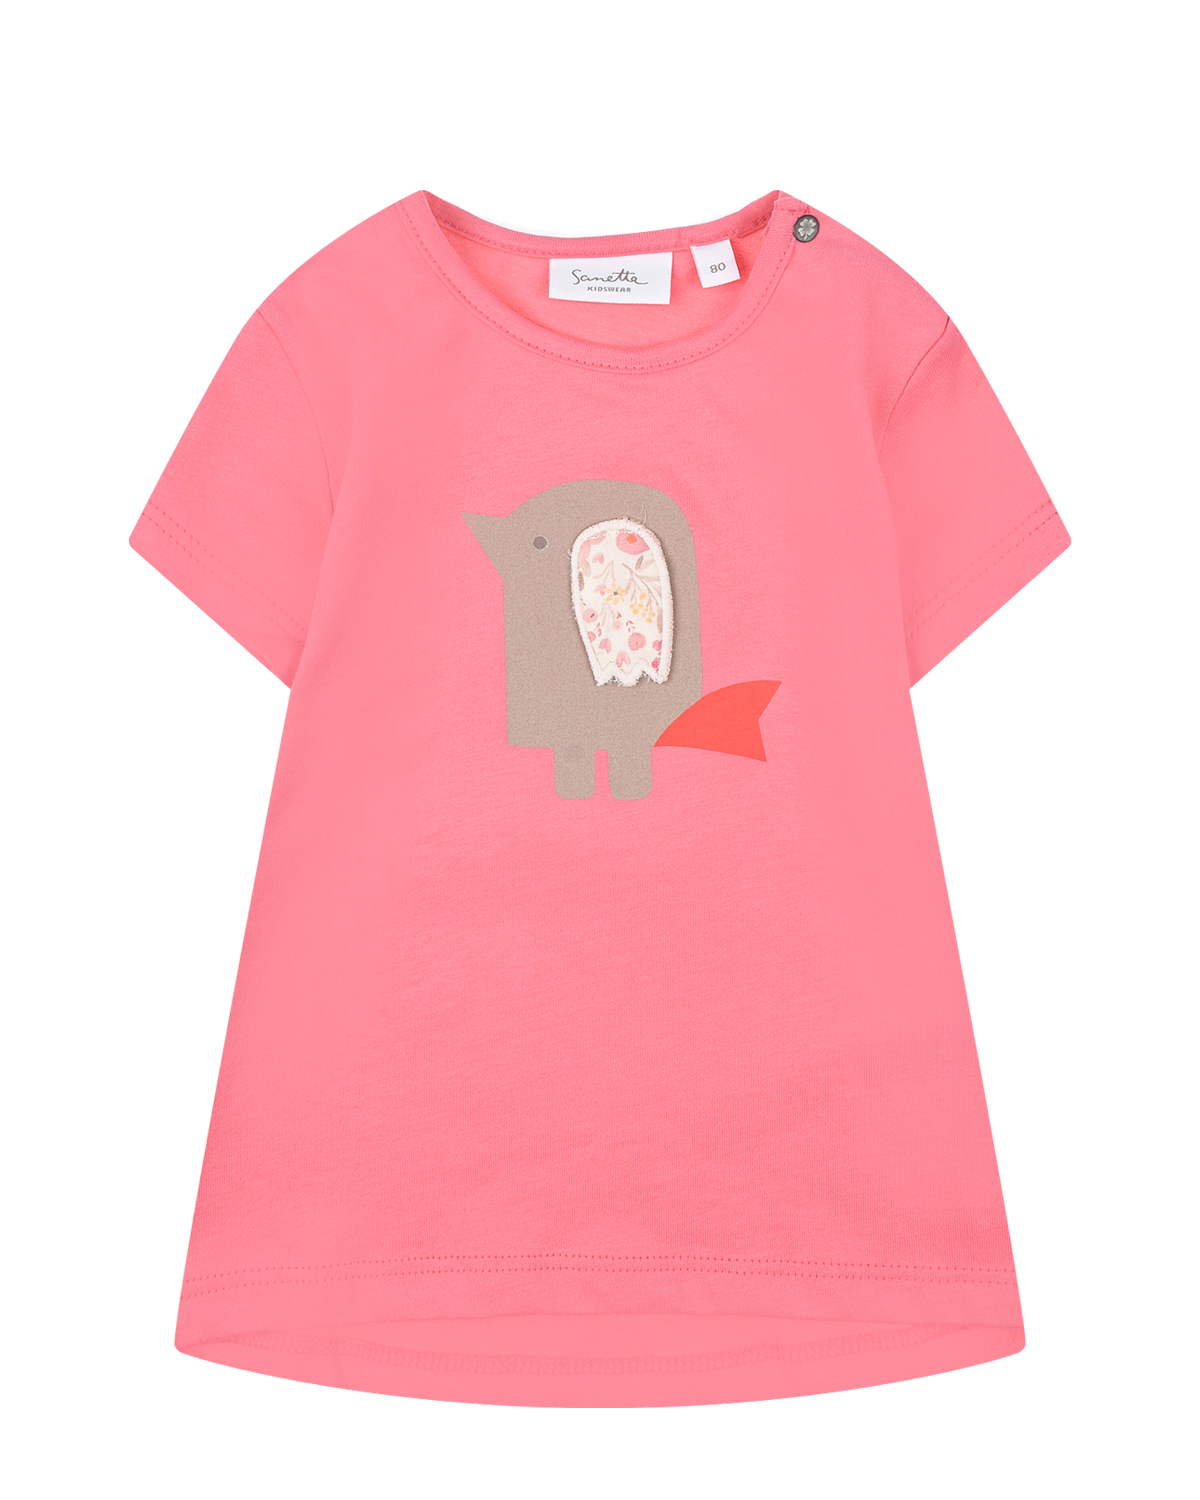 Розовая футболка с принтом "птица" Sanetta Kidswear, размер 80, цвет розовый - фото 1